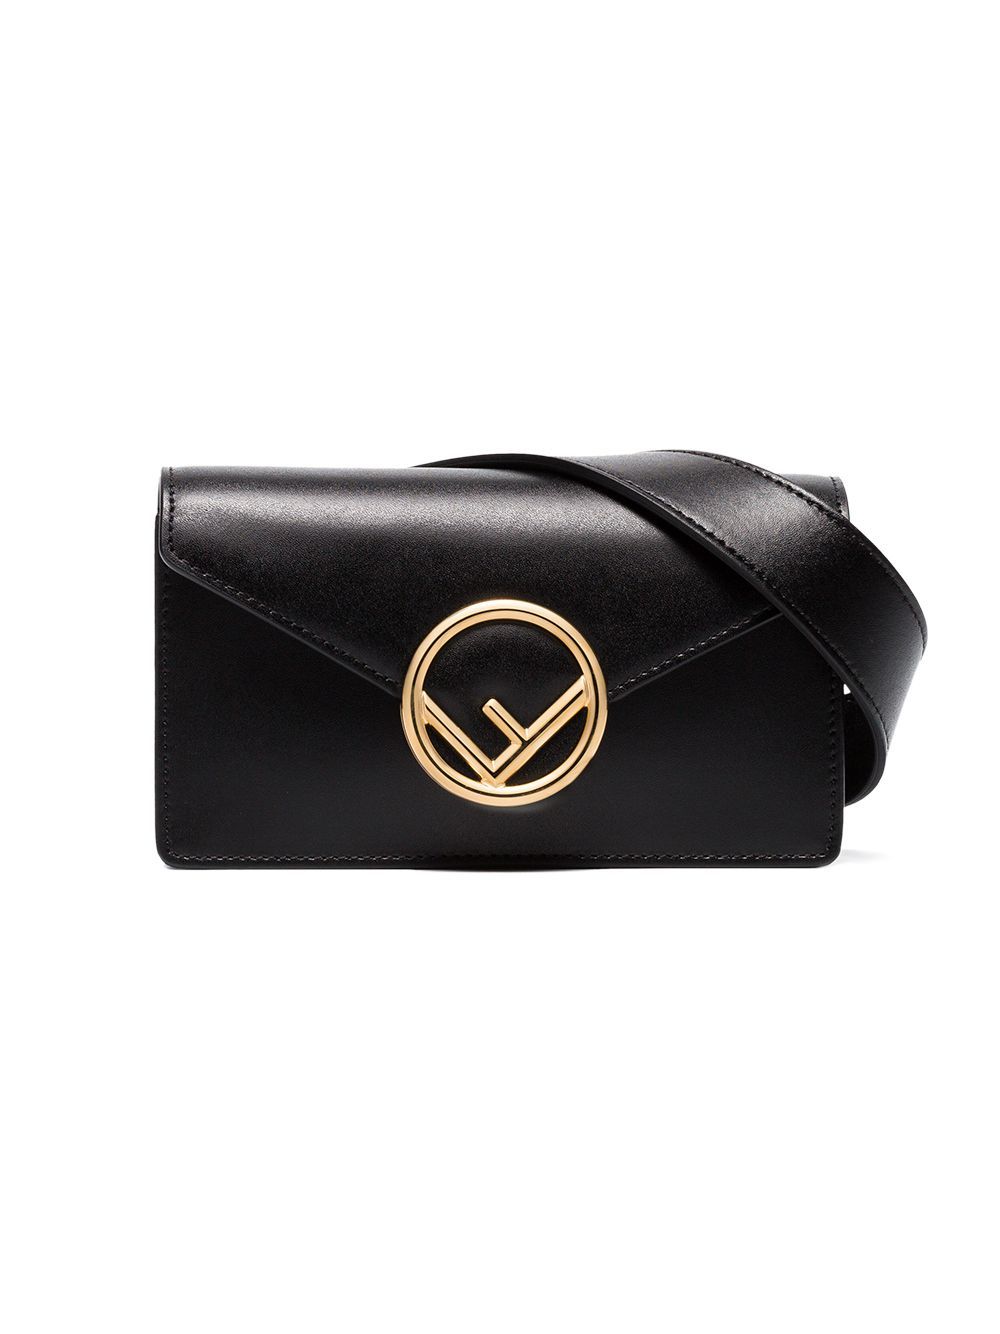 Fendi black logo leather belt bag | FarFetch Global